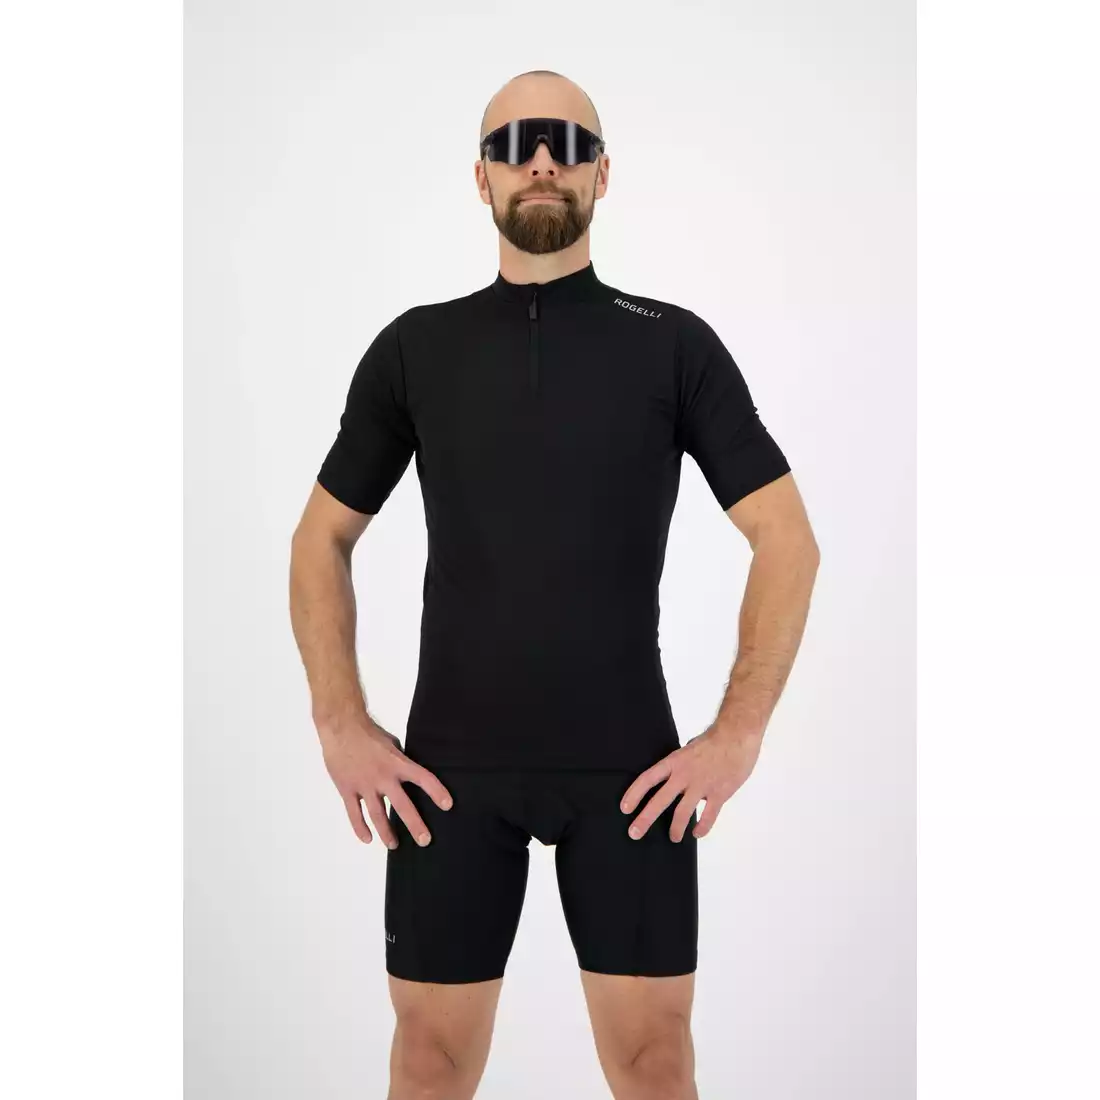 Rogelli CORE men's cycling jersey, black